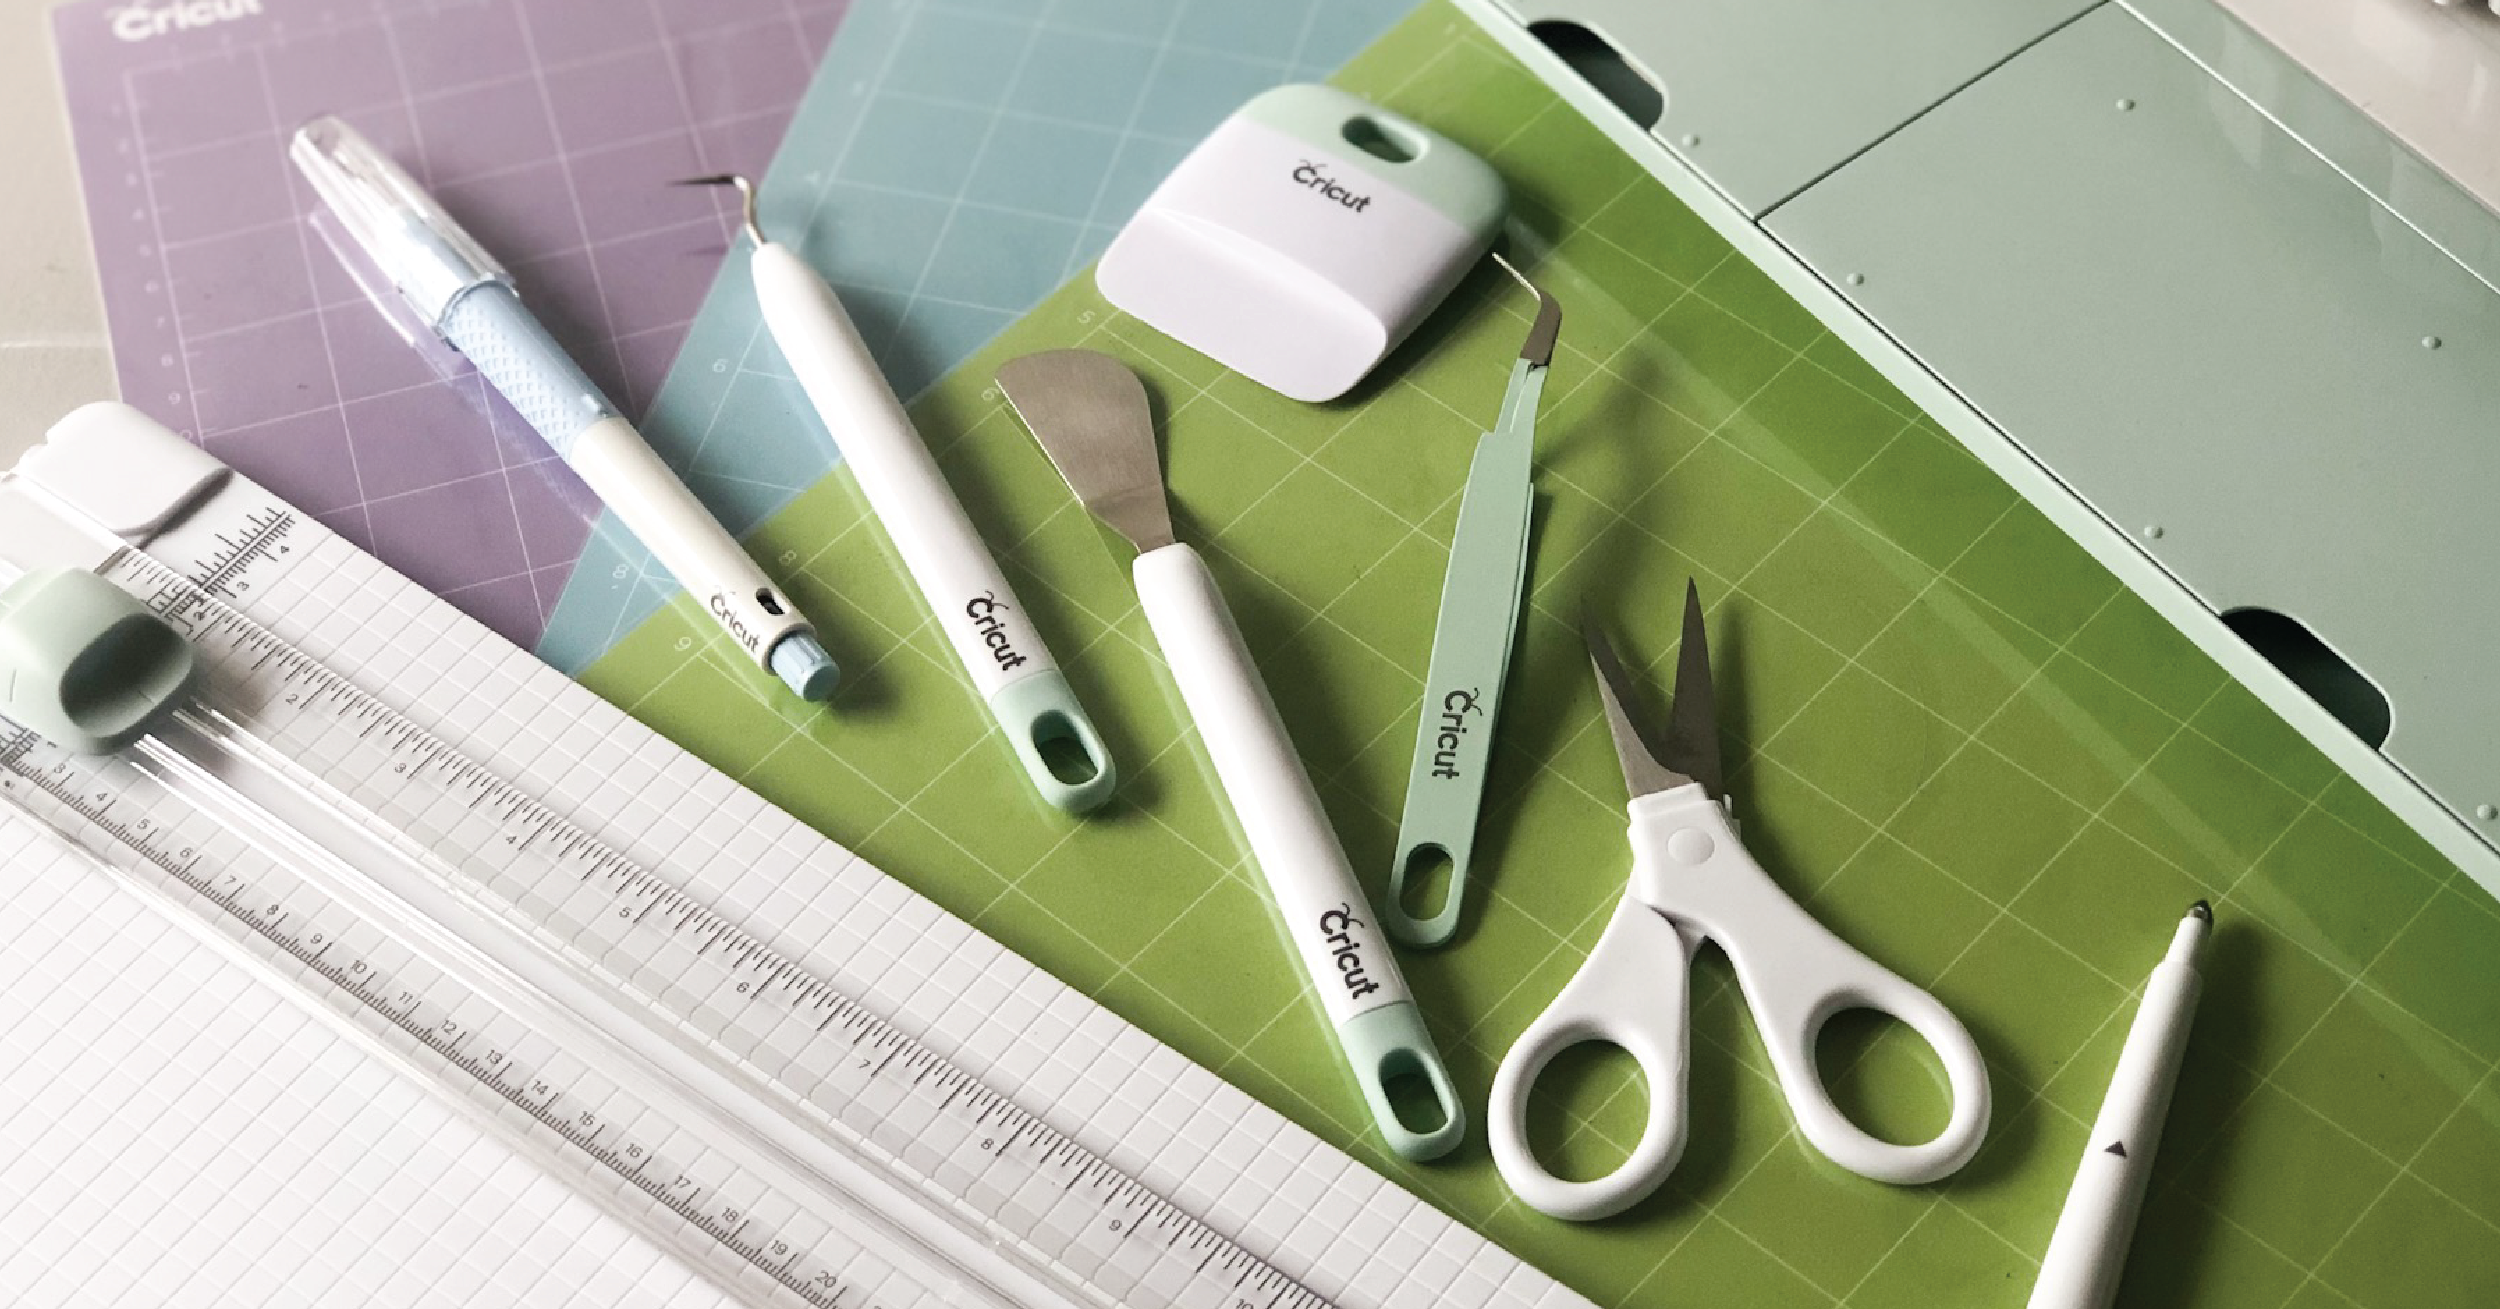 Cricut Maker and Explore Air 2 Blade Accessories Kit: Variety (3) GripMats,  and Pen Set Bundle